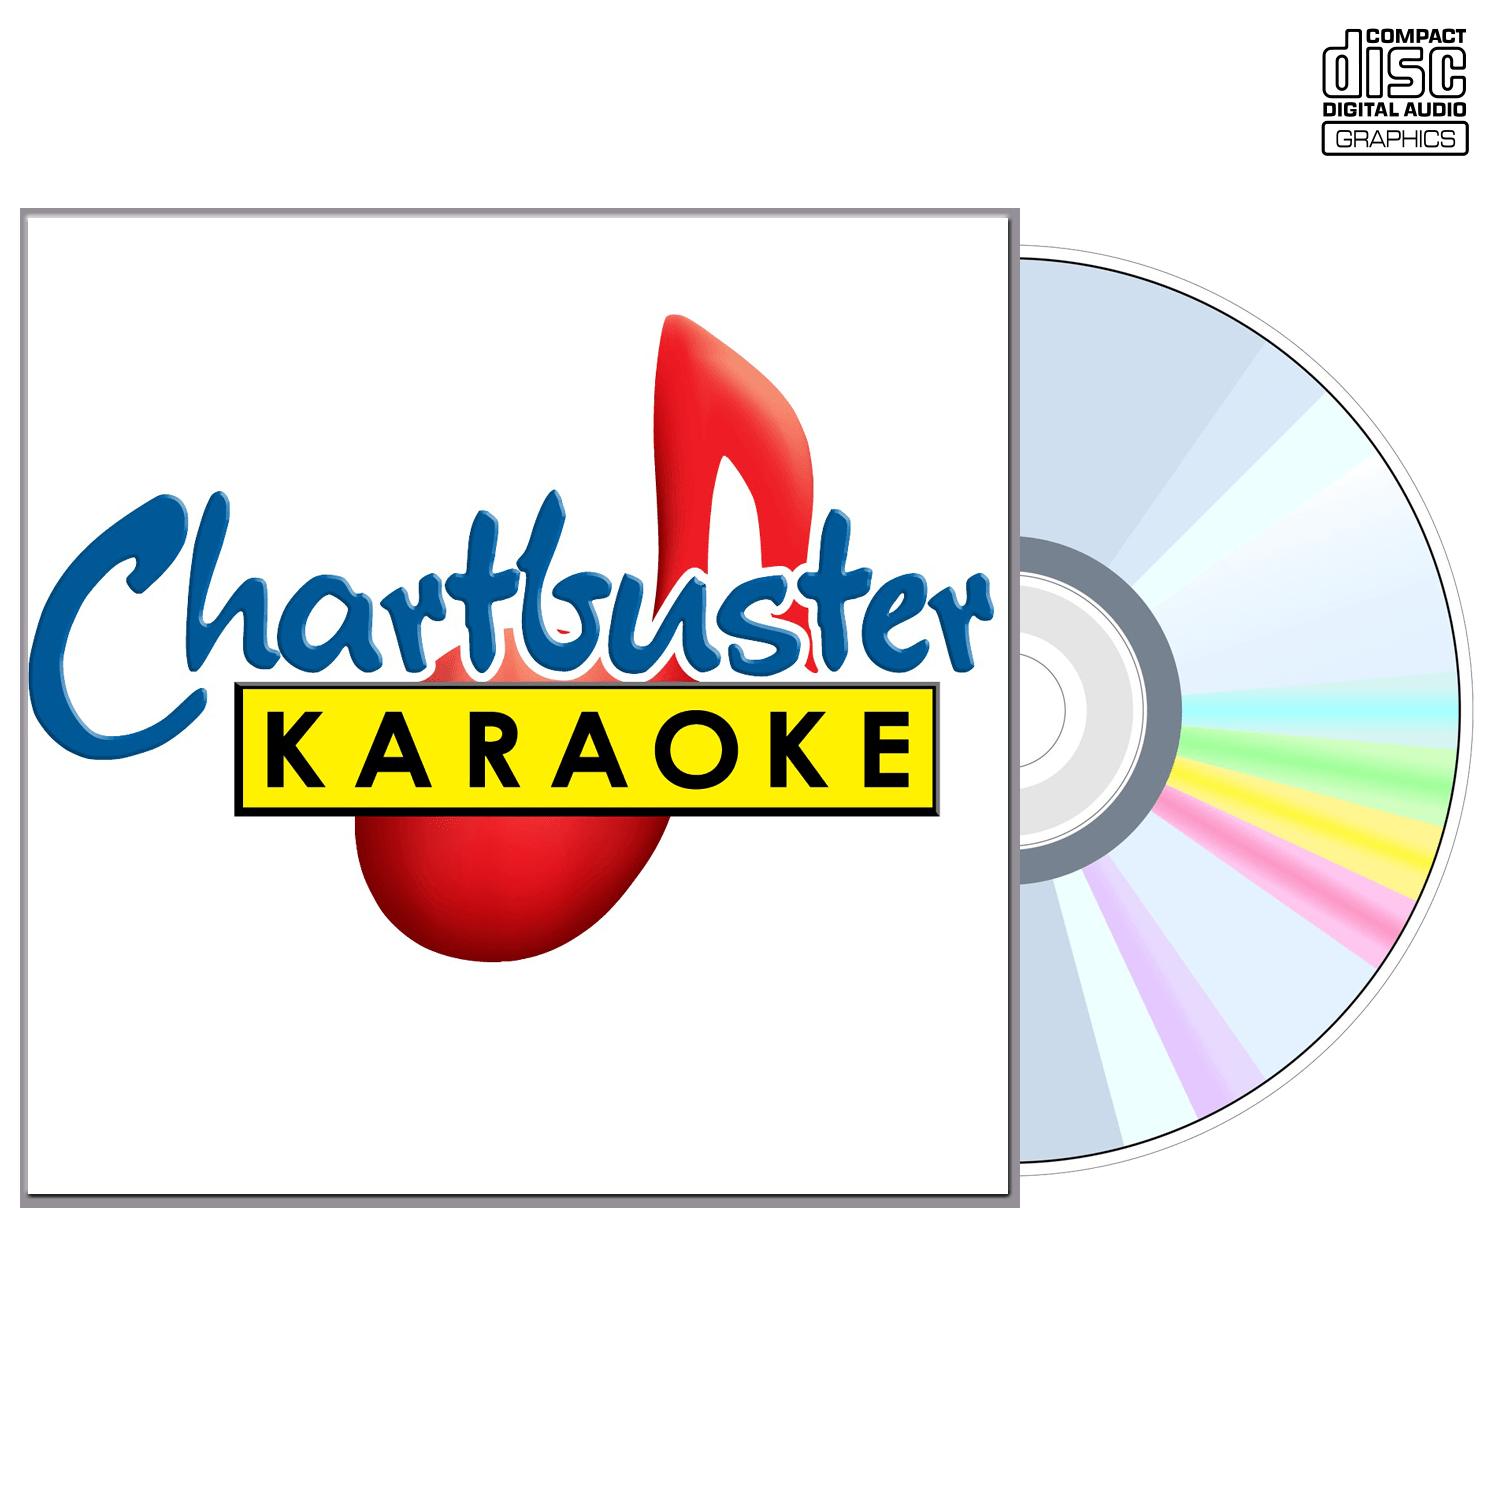 Janis Joplin - CD+G - Chartbuster Karaoke - Karaoke Home Entertainment